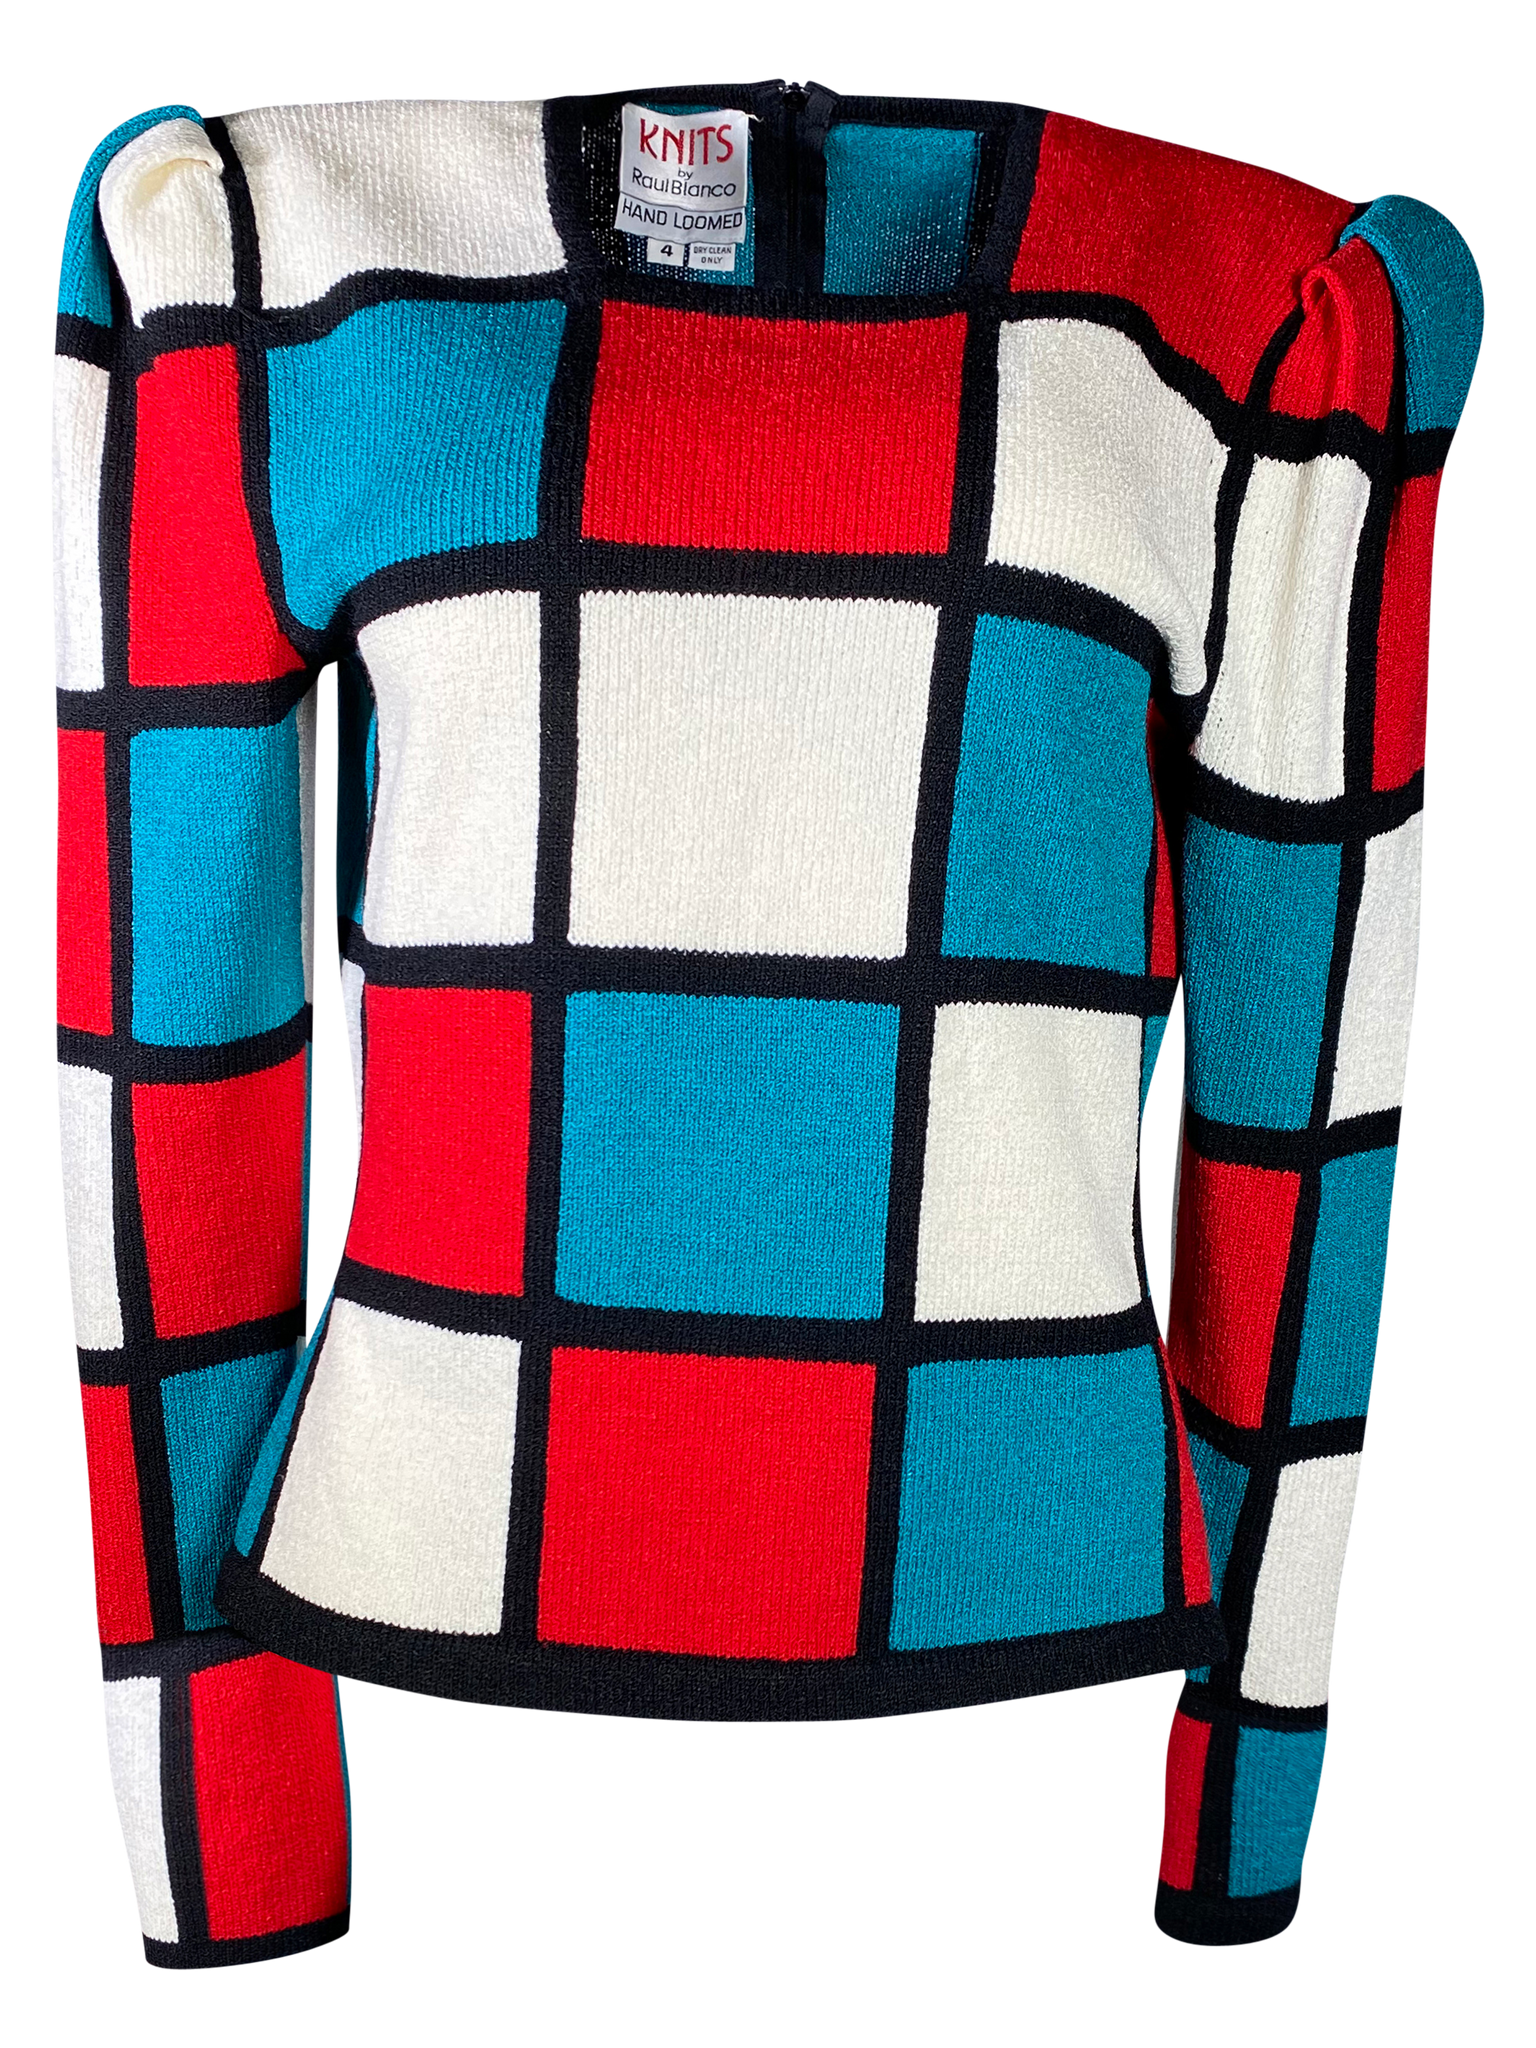 Block Print Raul Campo Mondrian Knit Top